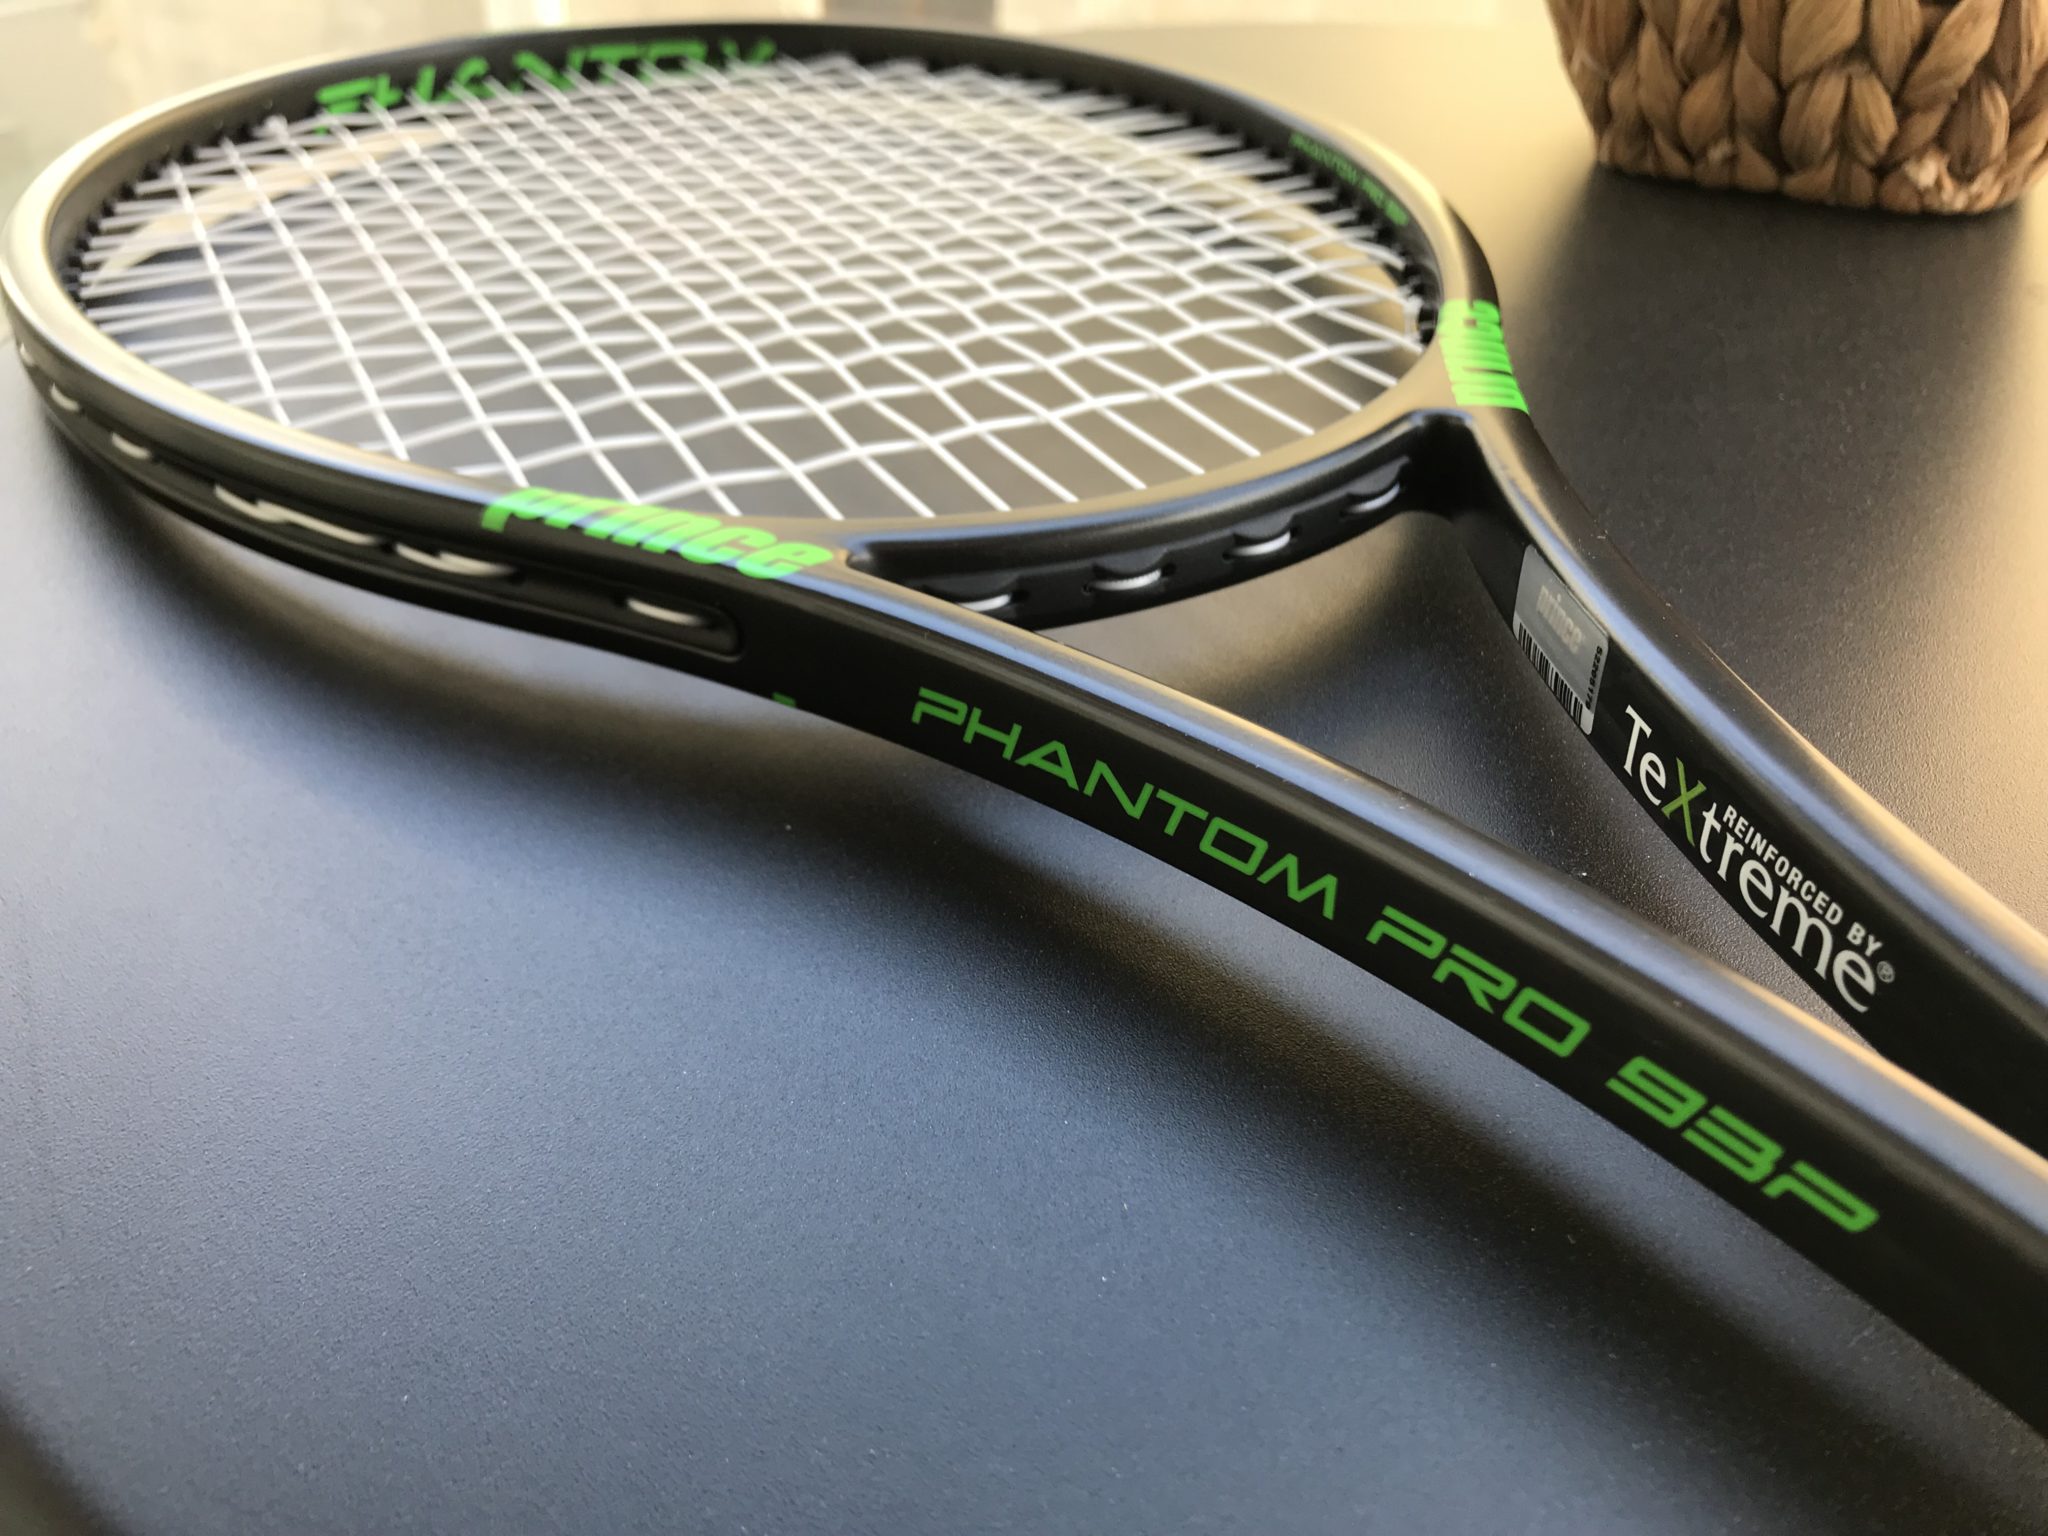 Prince Phantom Pro 93P Racquet Review - A classic player racquet